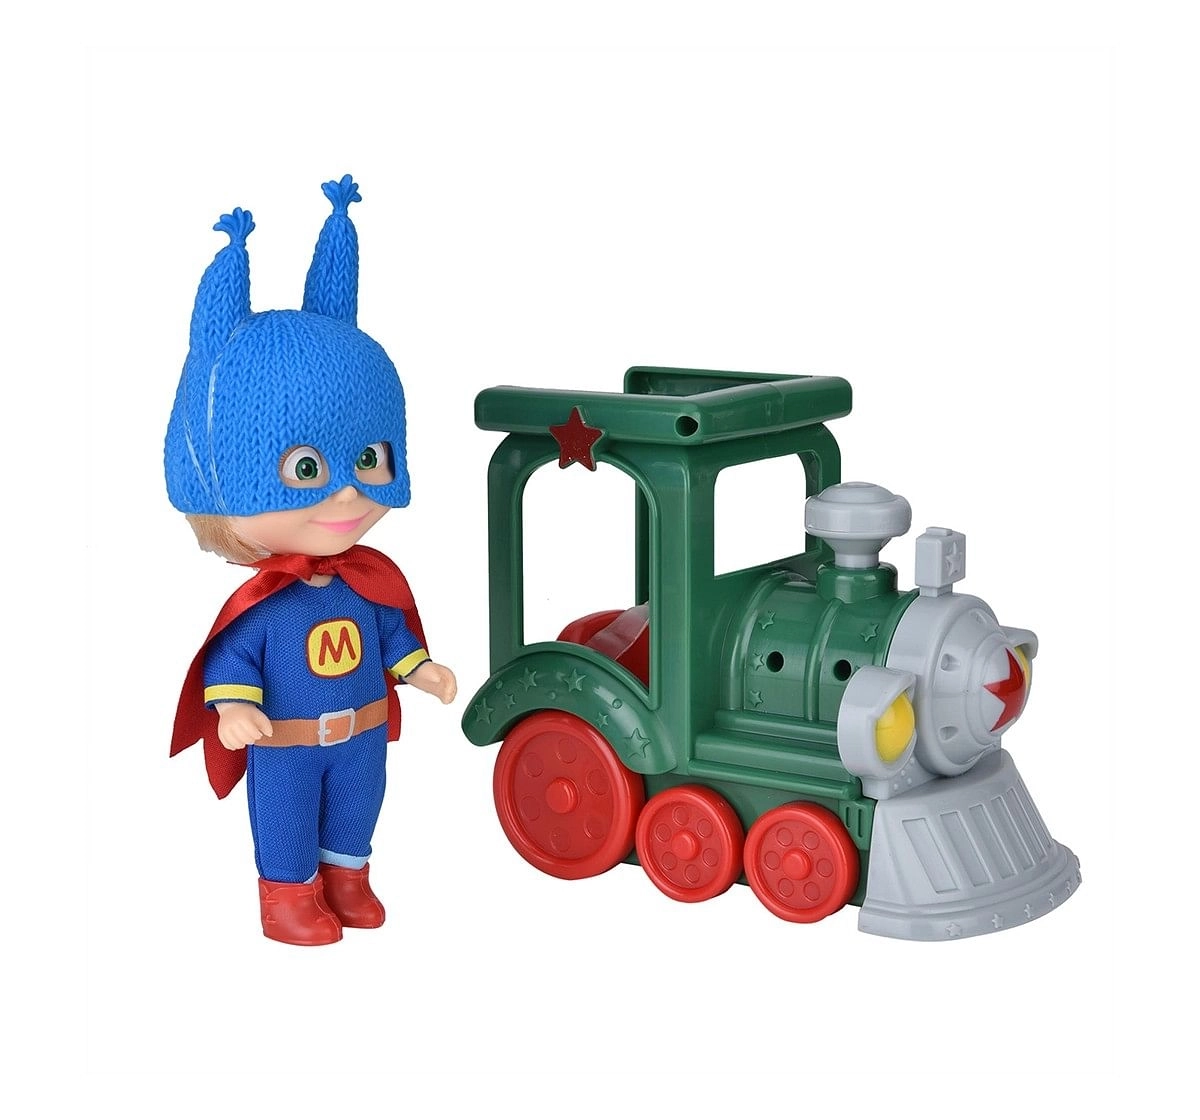 Masha And The Bear Masha Superhero With Train Roleplay sets for age 3Y+ 